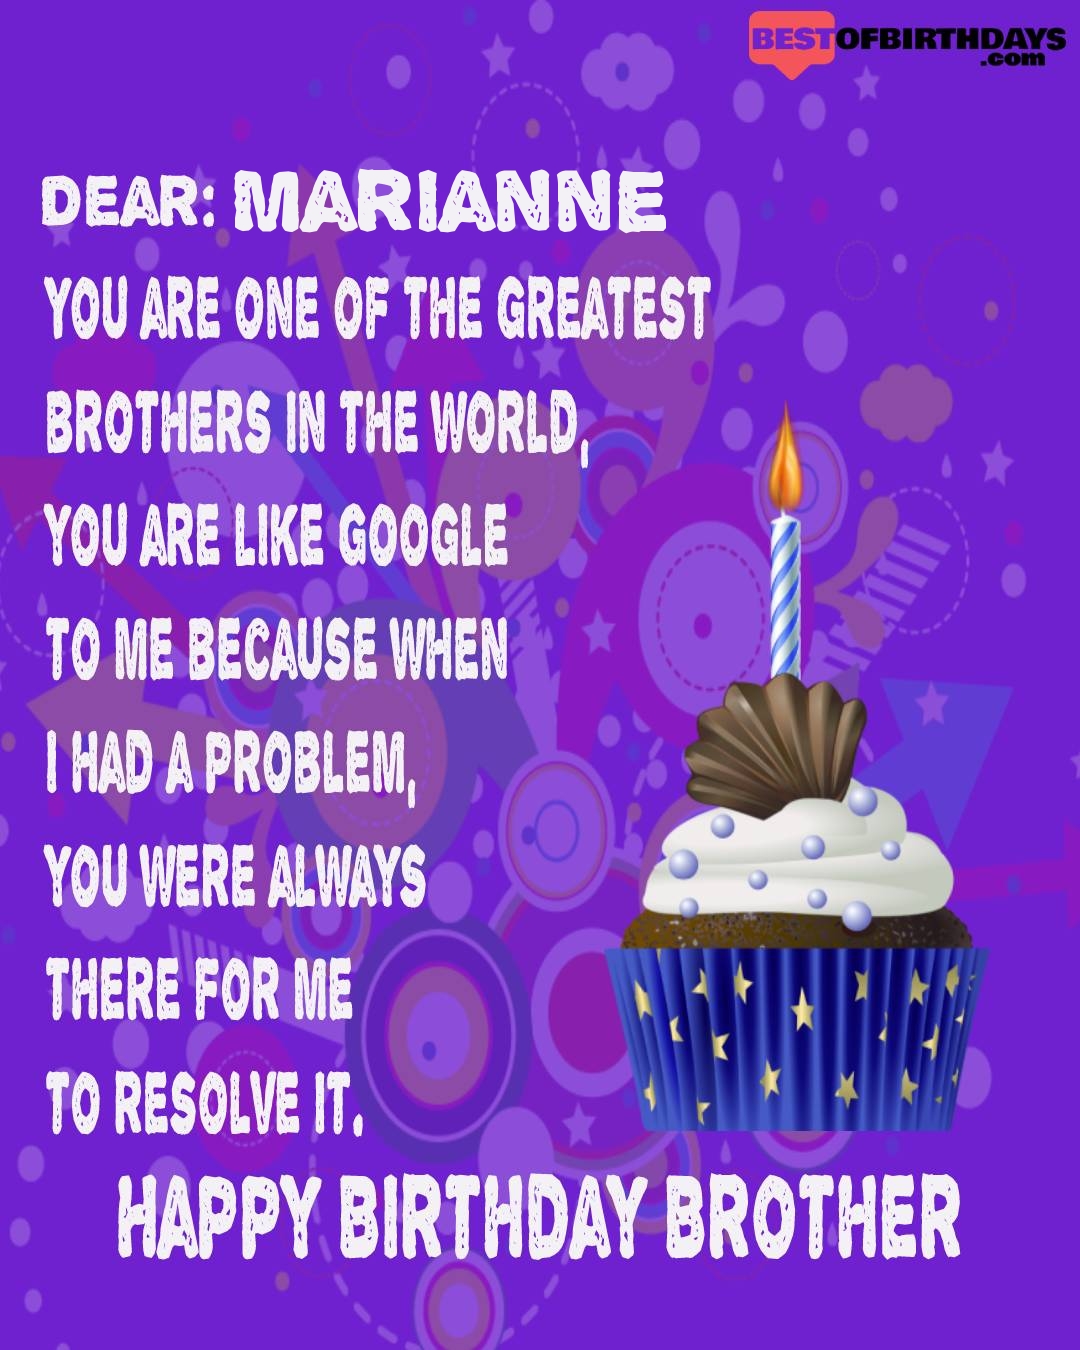 Happy birthday marianne bhai brother bro